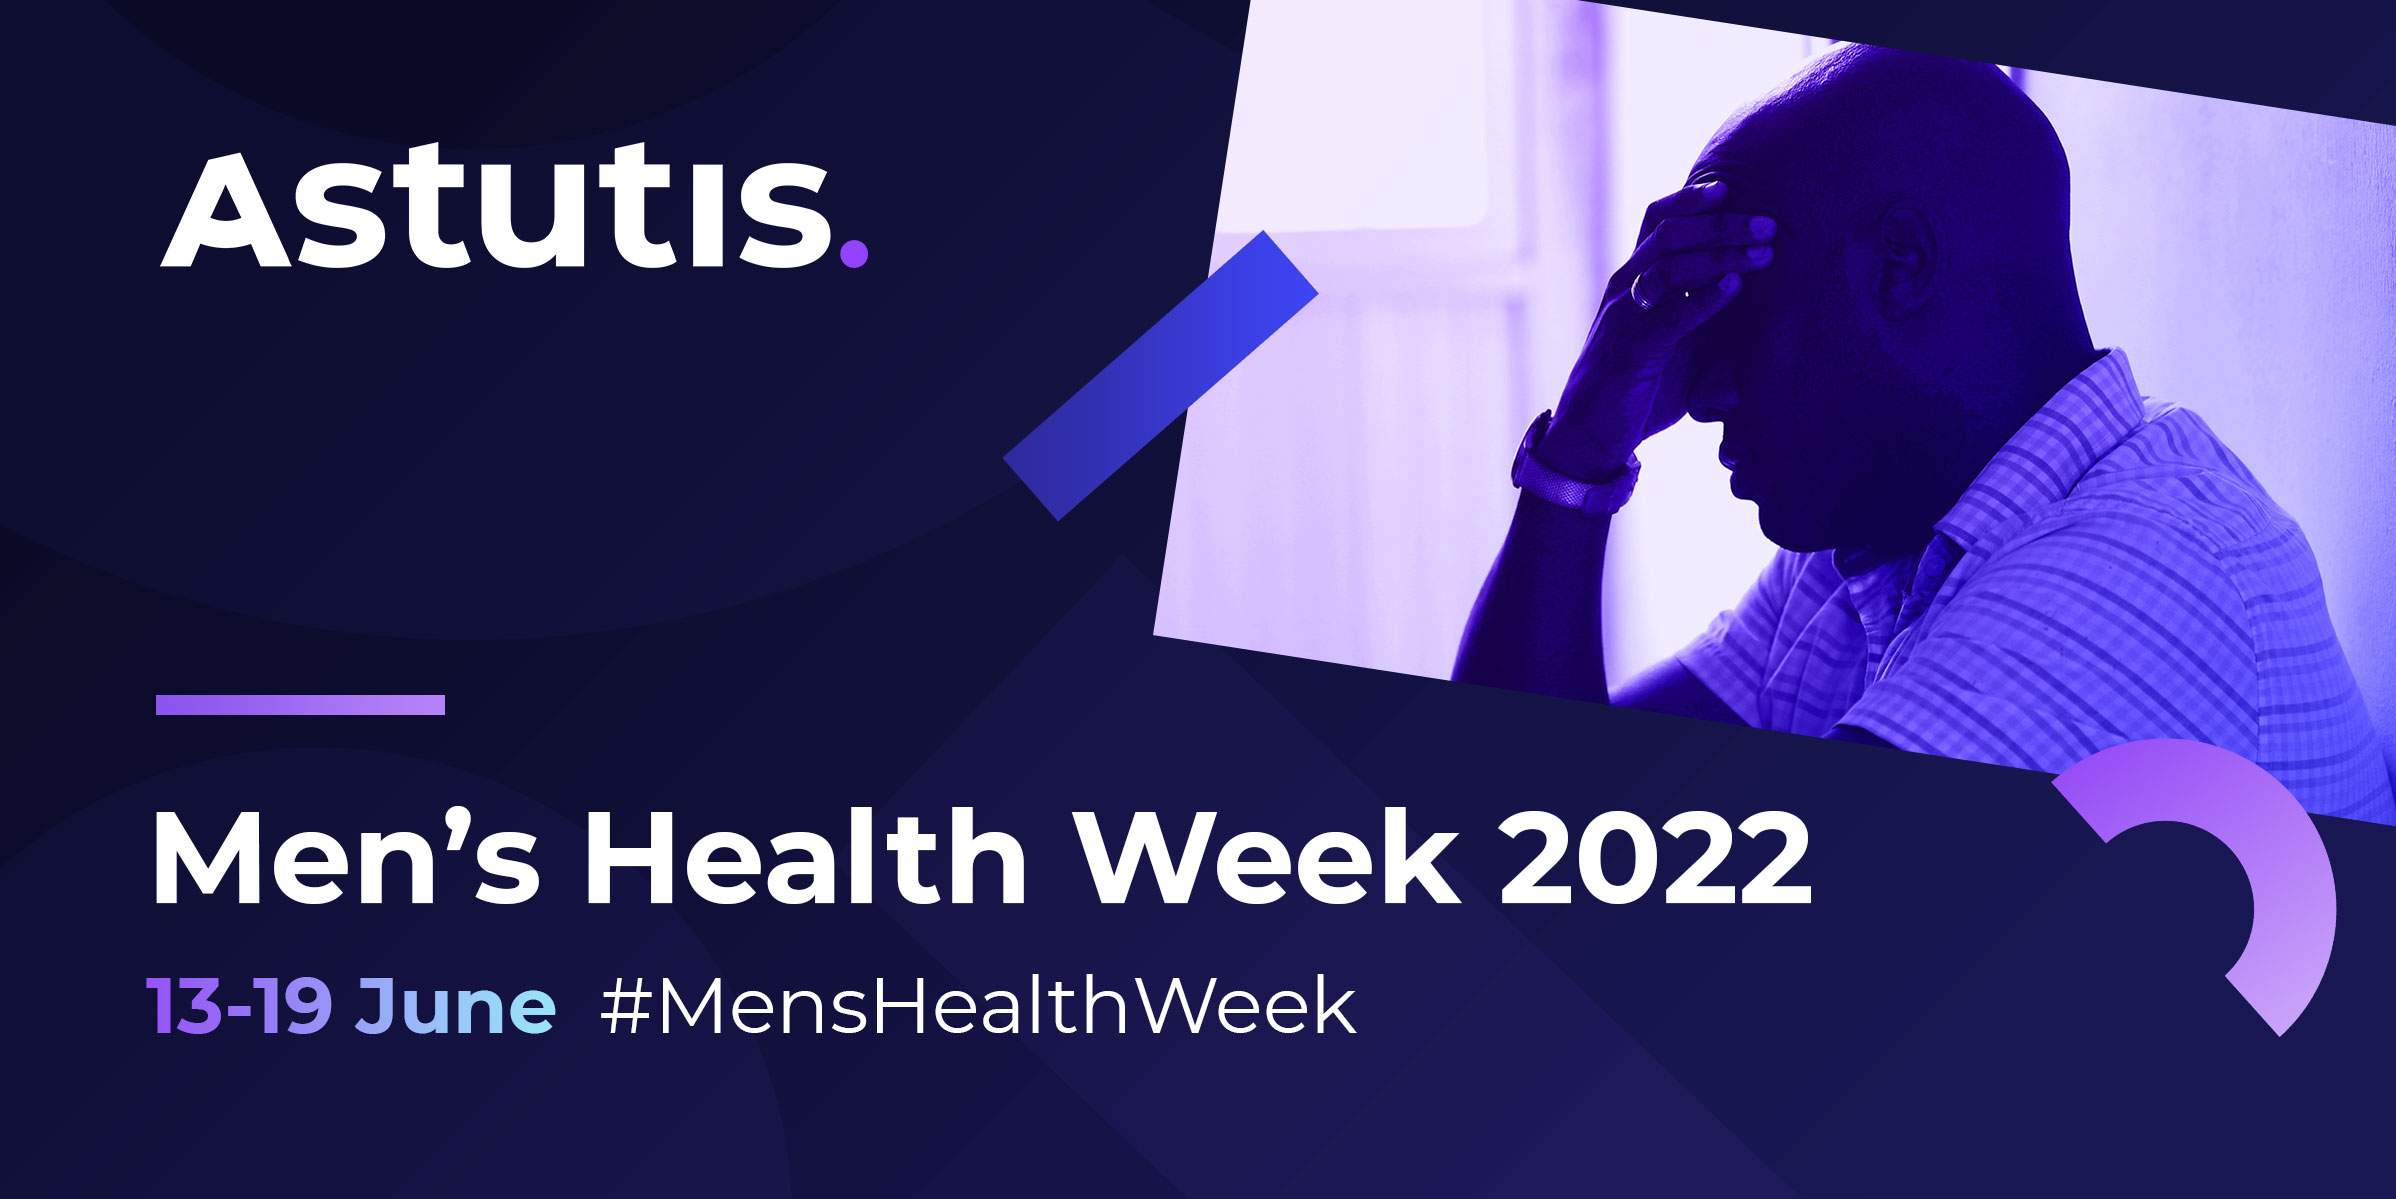 Men's Health Week 2022 Image